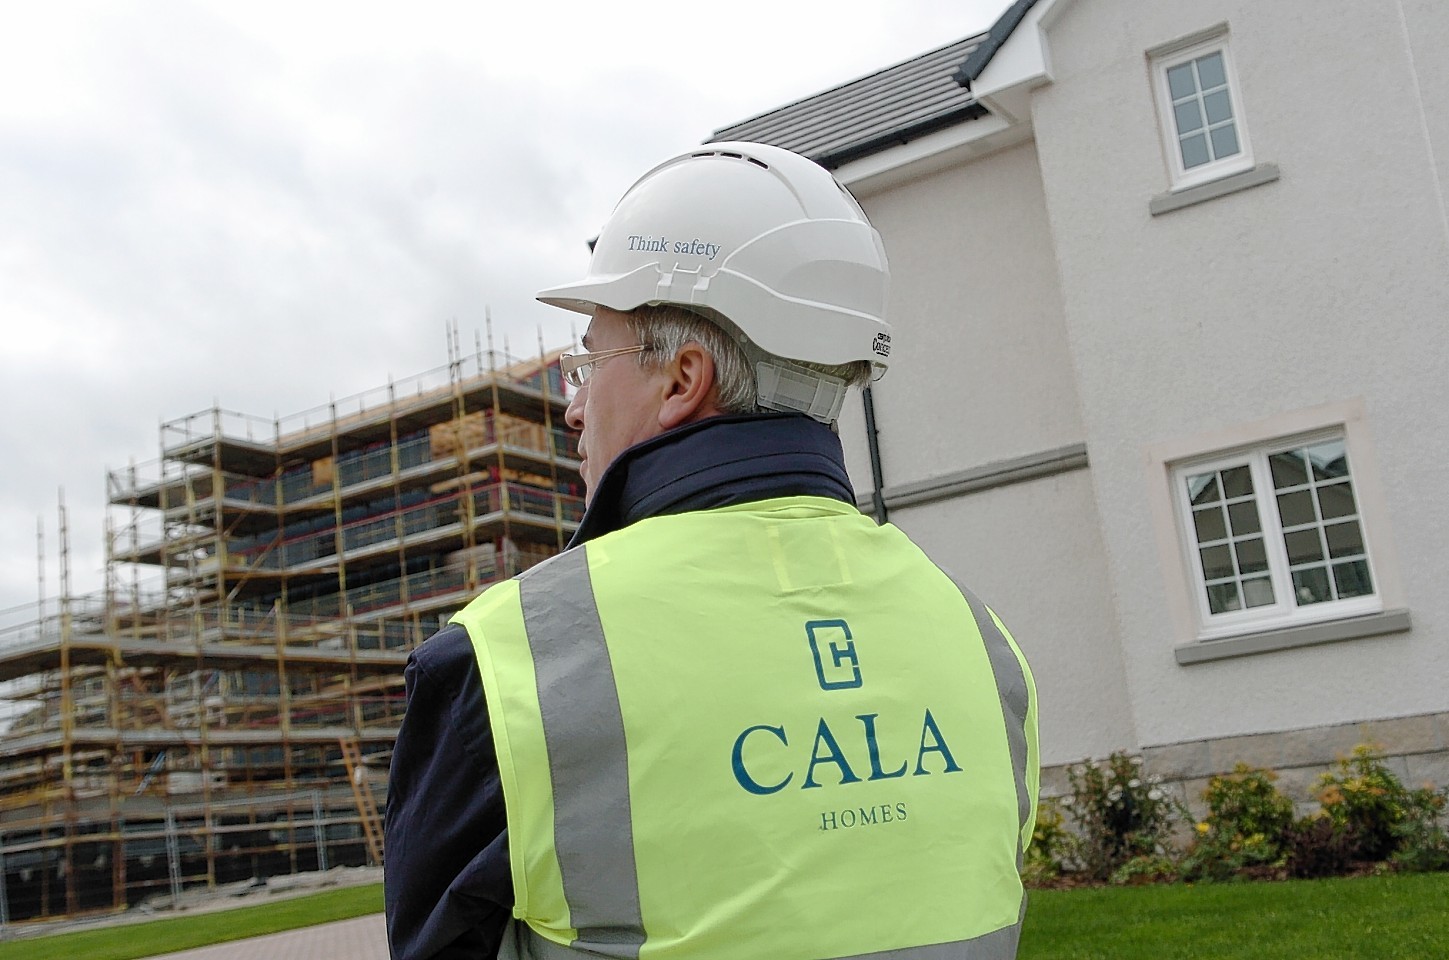 Cala Homes wants to build 57 homes at Conglass